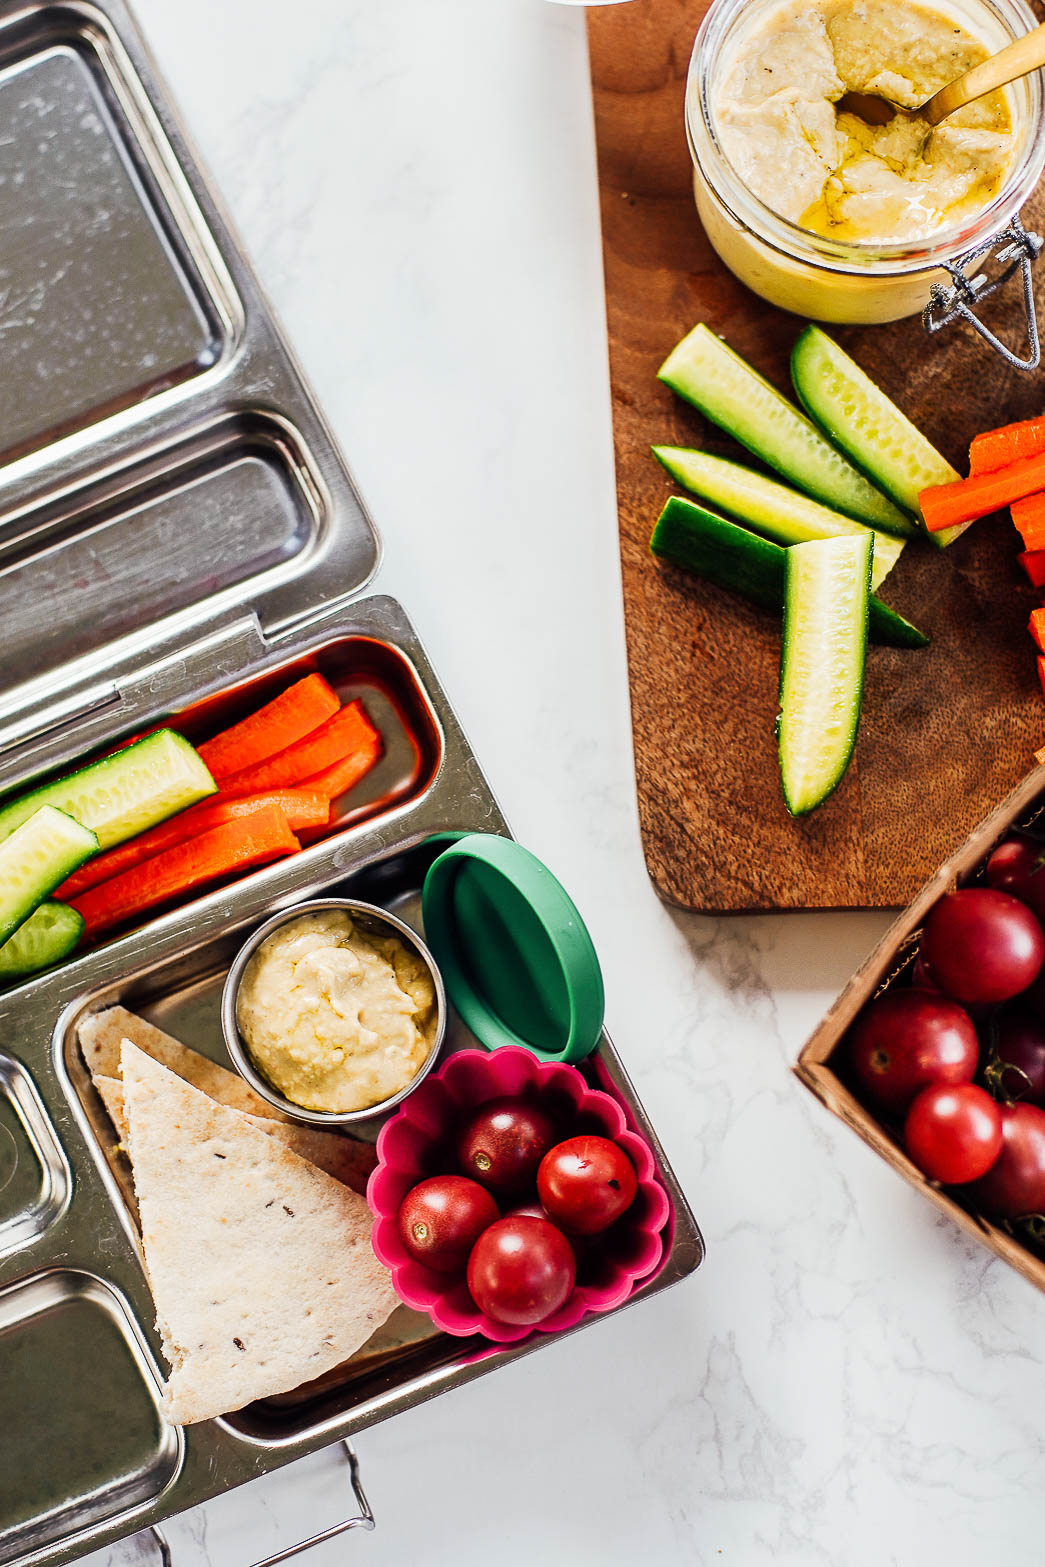 Vegetarian lunchable: hummus, pita bread, cherry tomatoes, cucumber sticks, carrot sticks in a bento box.